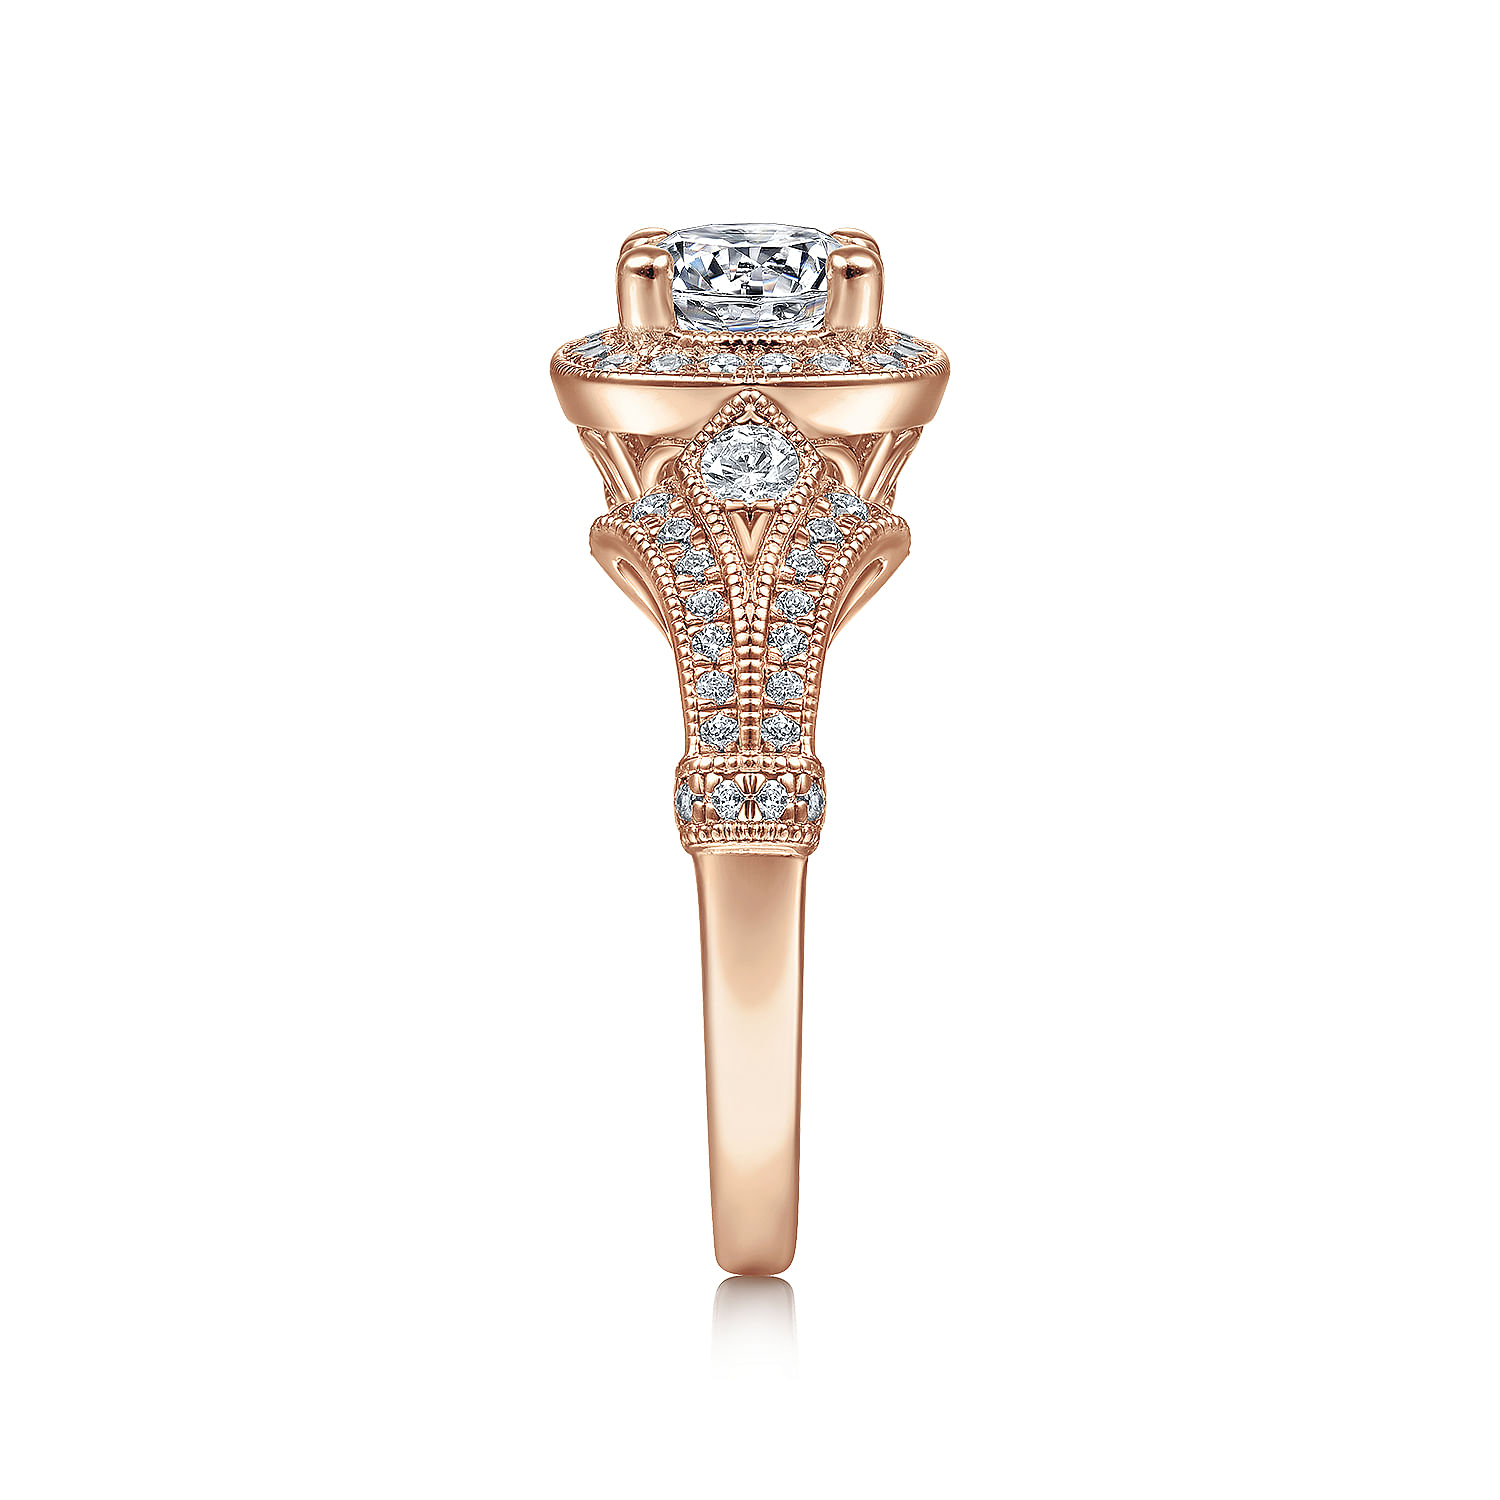 Vintage Inspired 14K Rose Gold Cushion Halo Round Diamond Engagement Ring